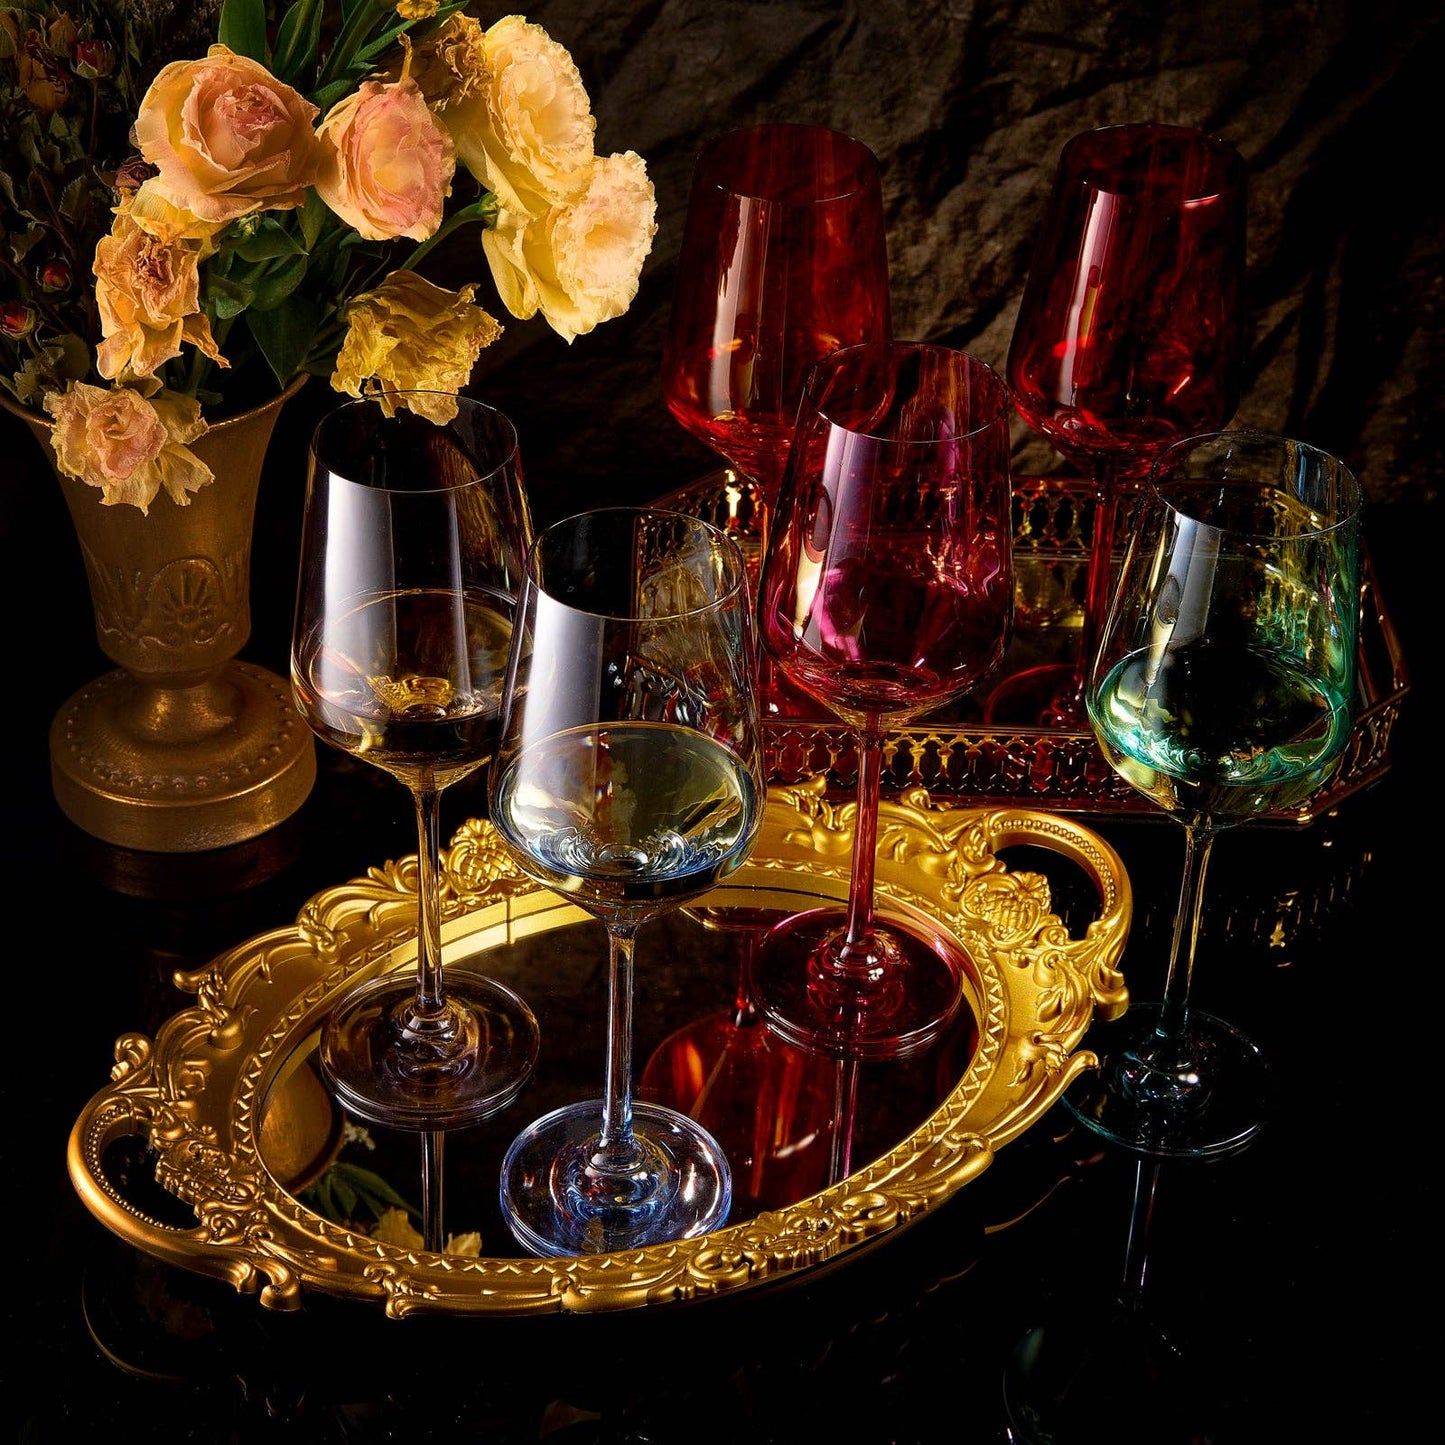 Colored Wine Glass Set, Large 12 oz Glasses Set of 6